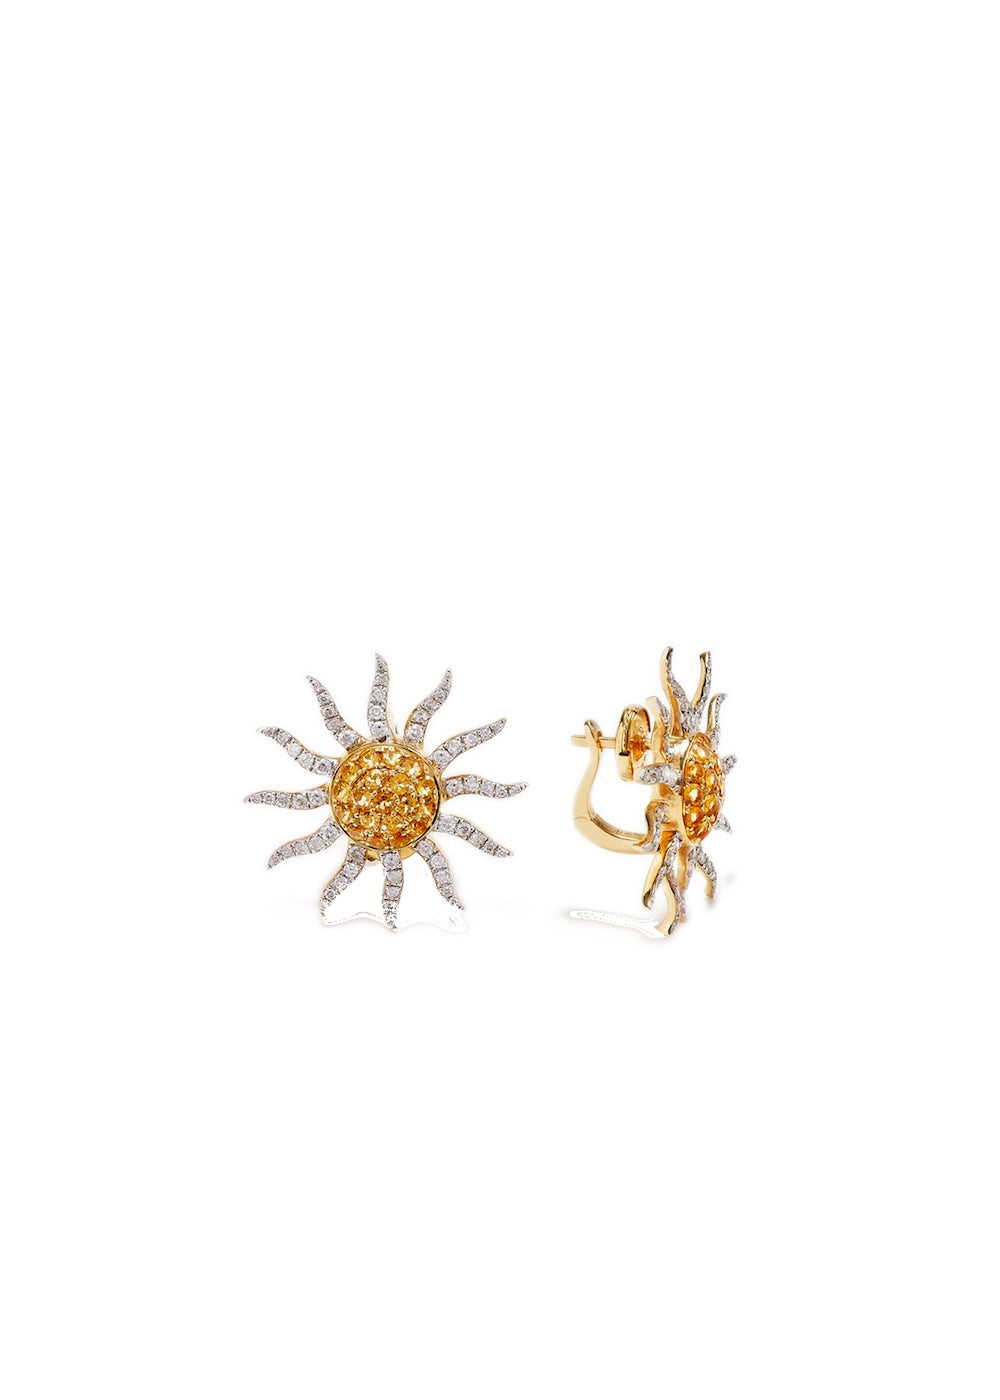 Bo Soleil 9k yellow gold, citrine and diamond earrings